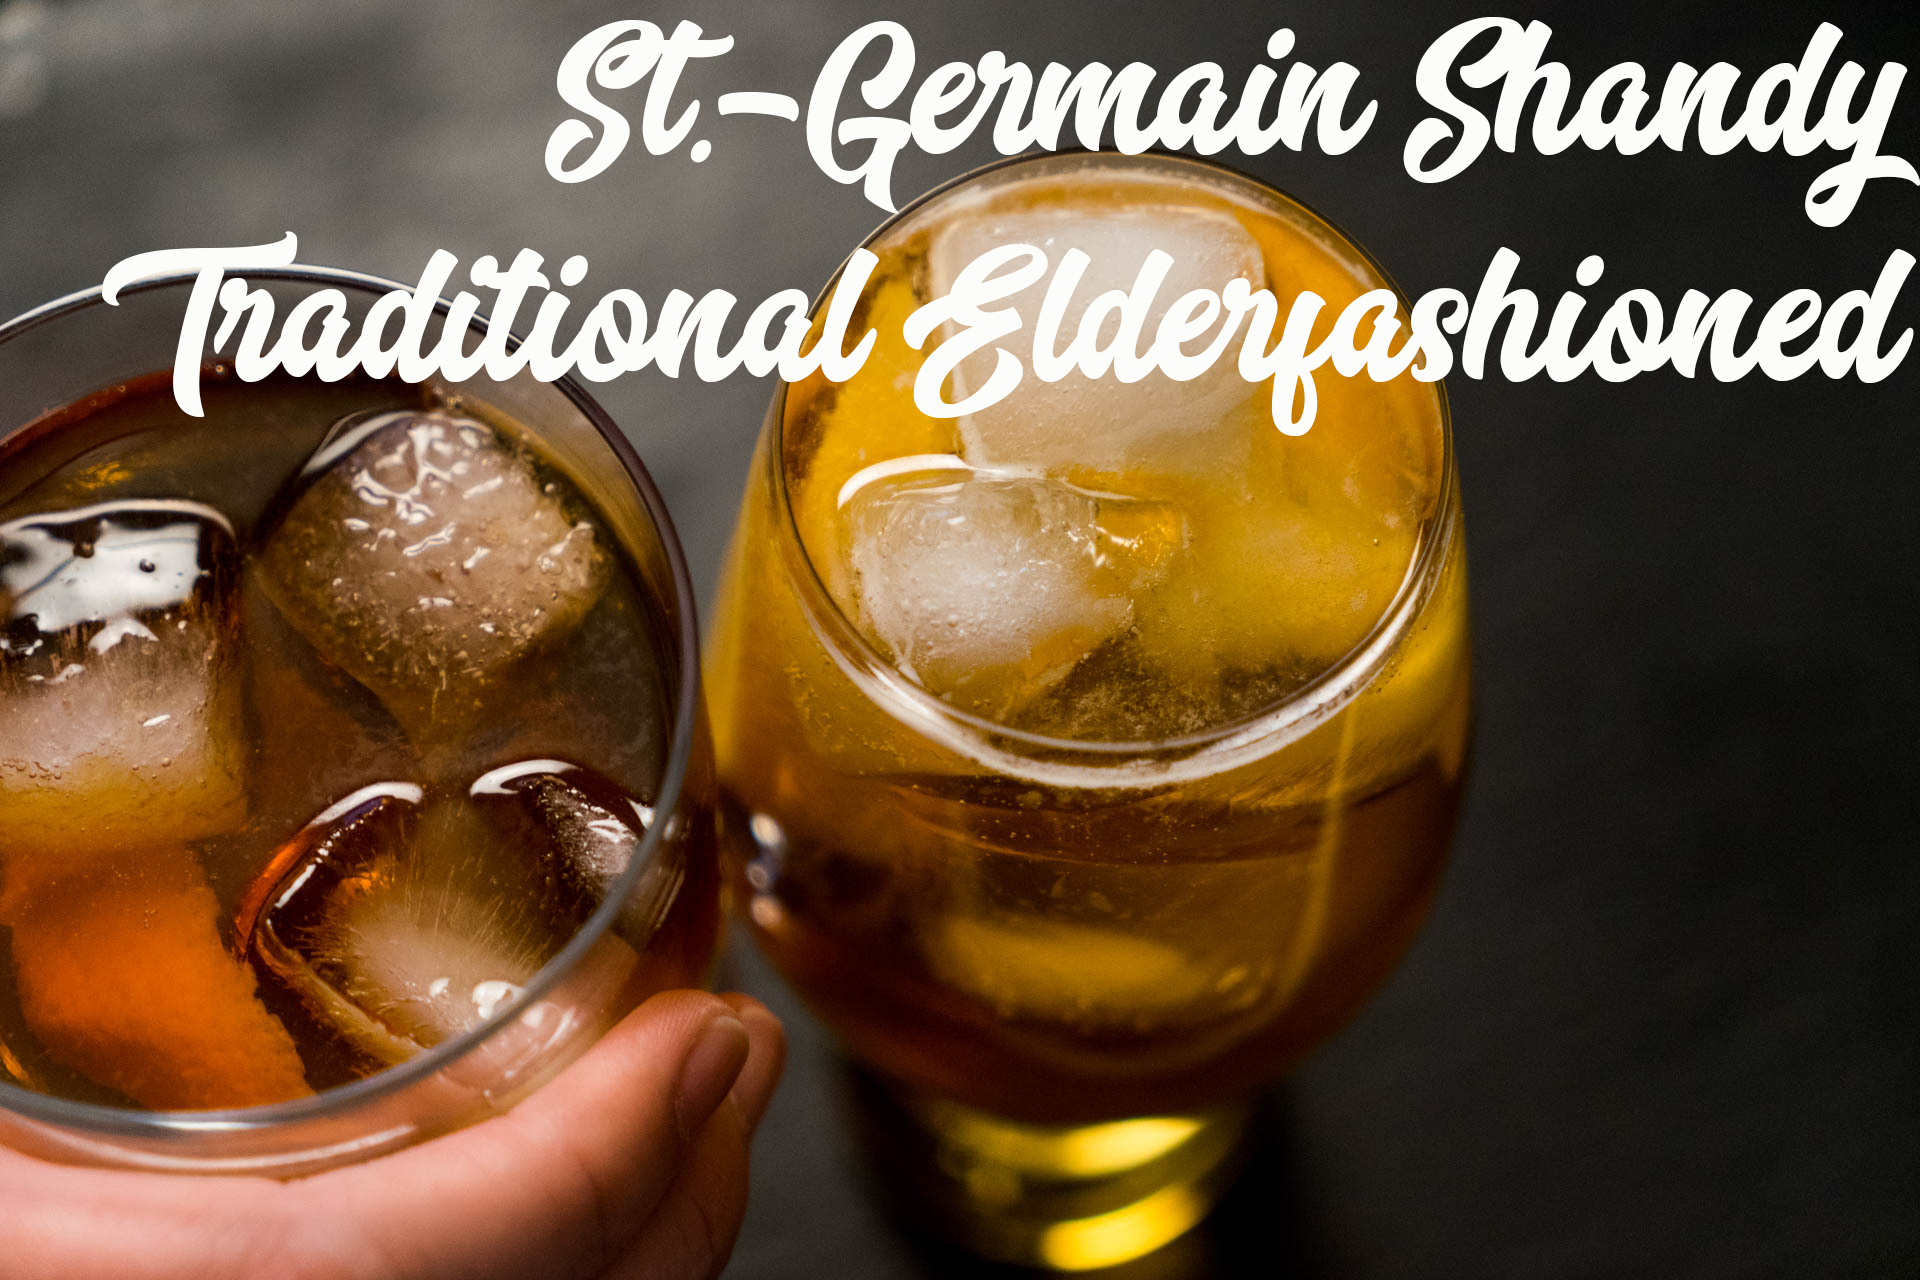 St. Germain Shandy & Traditional Elderfashioned